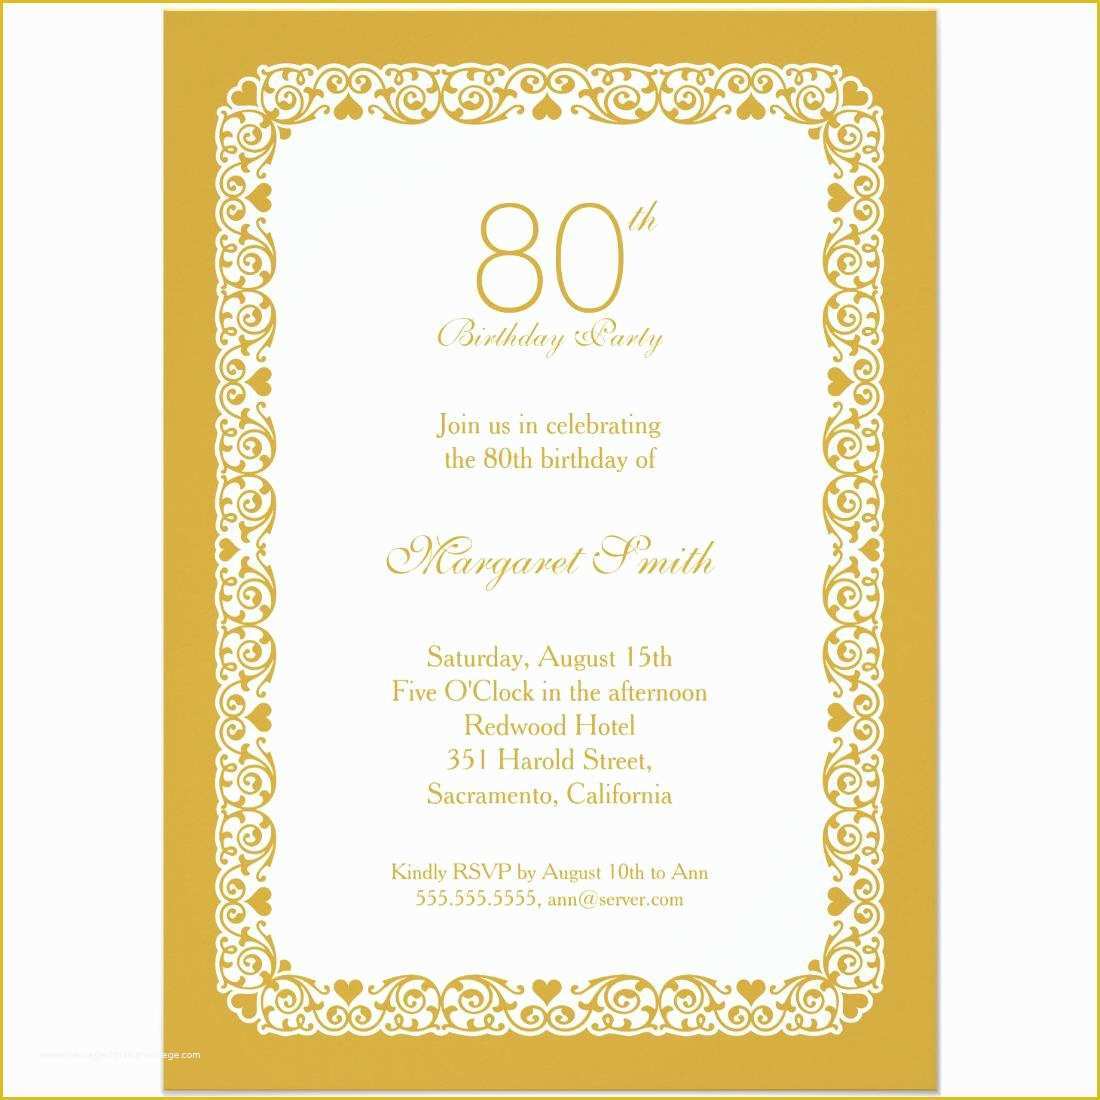 Elegant Birthday Invitation Templates Free Of 15 Sample 80th Birthday Invitations Templates Ideas